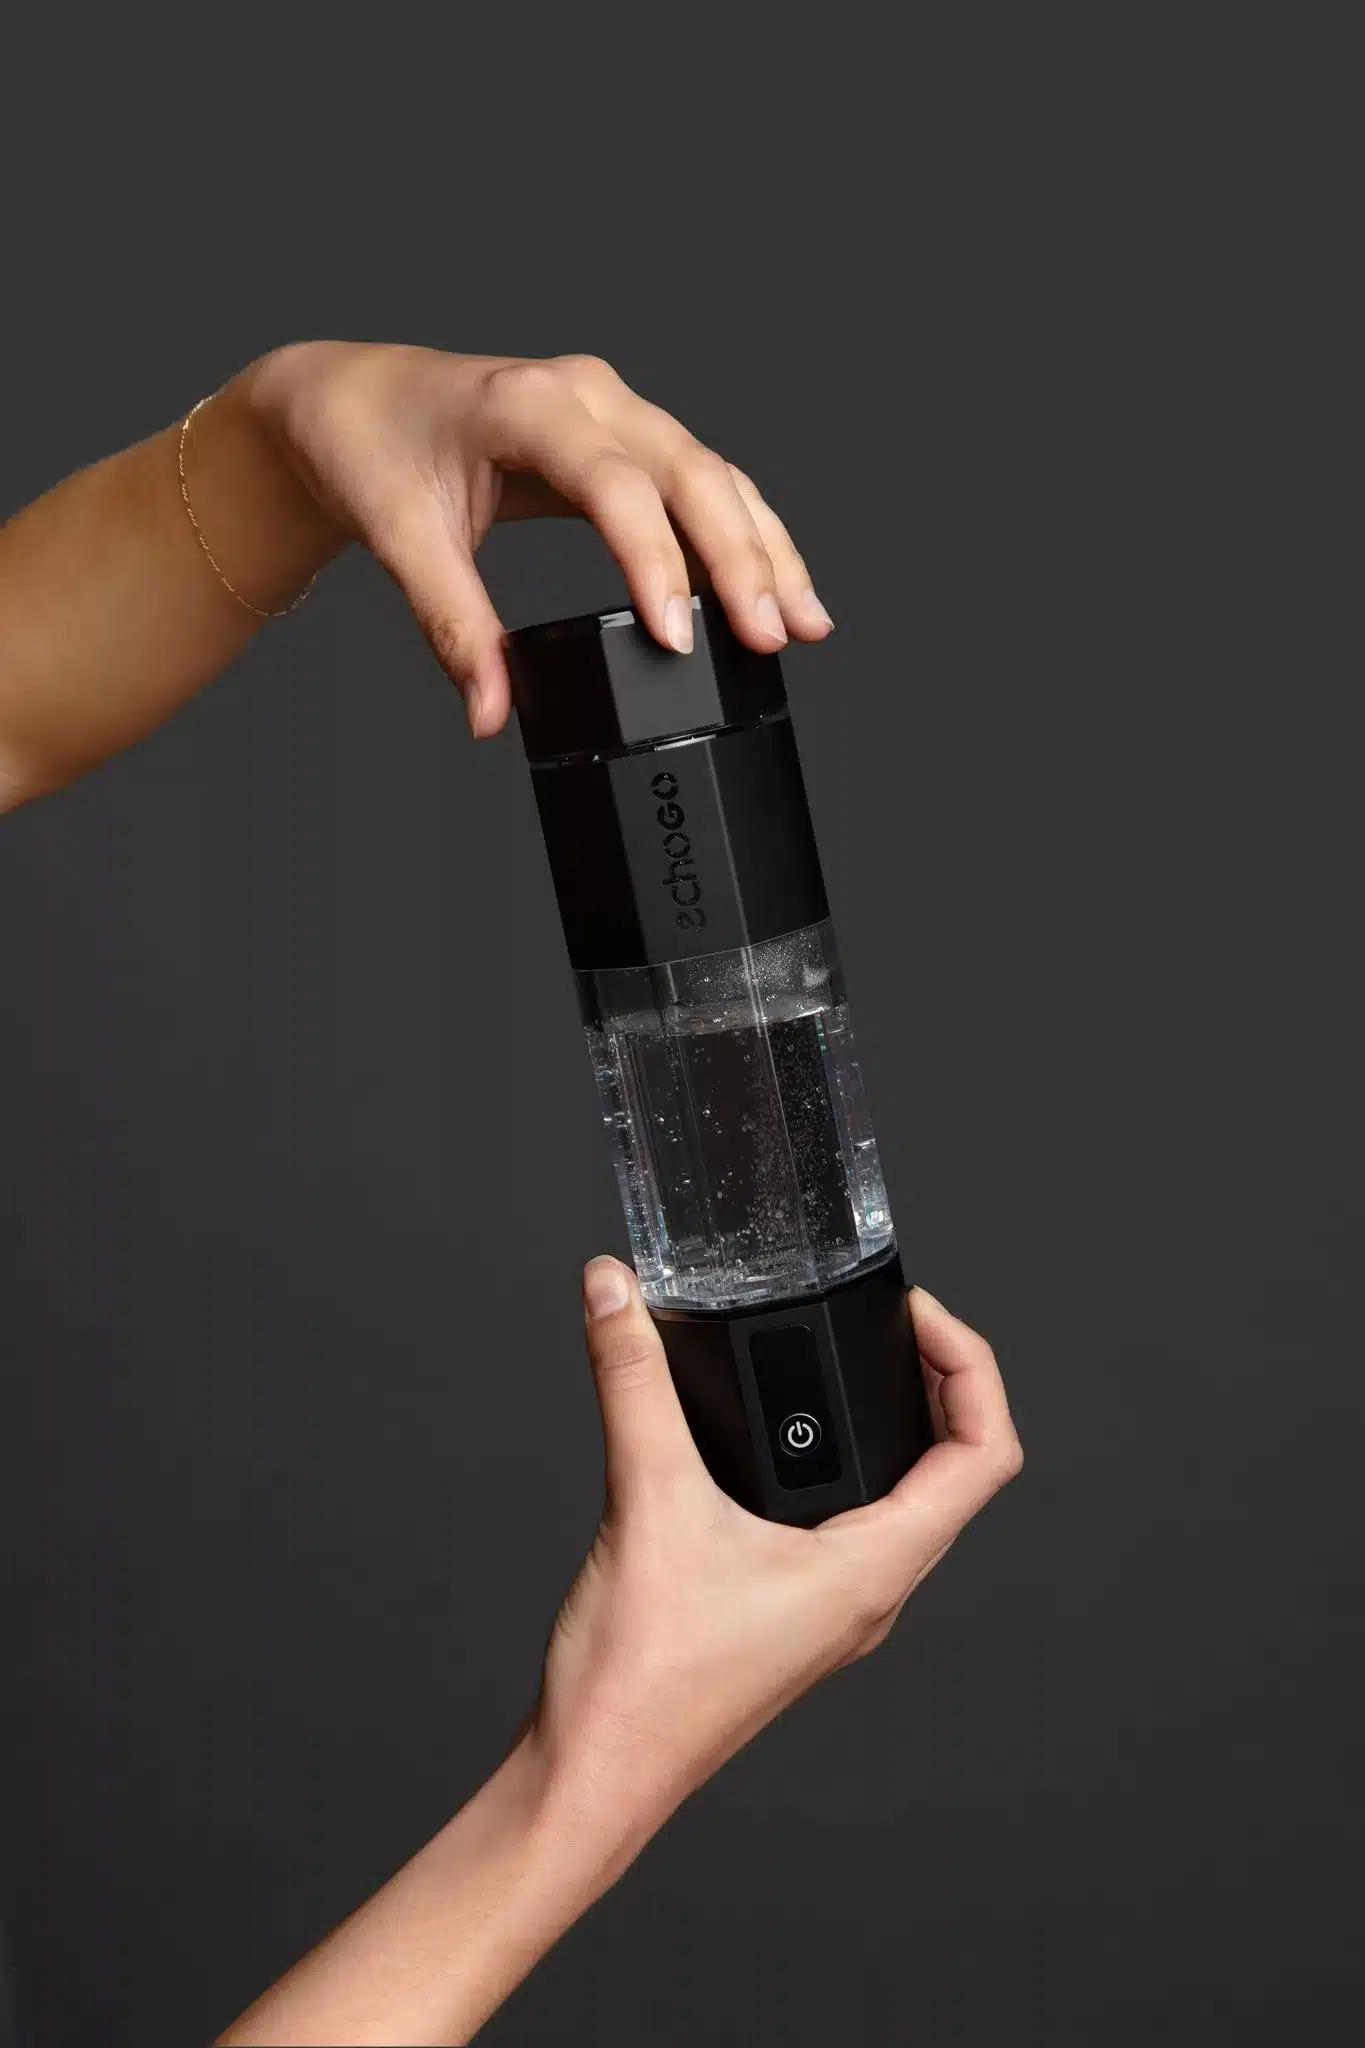 Gary Brecka Hydrogen Water Bottle - Echo Go+ Portable Hydrogen Water Bottle  Review